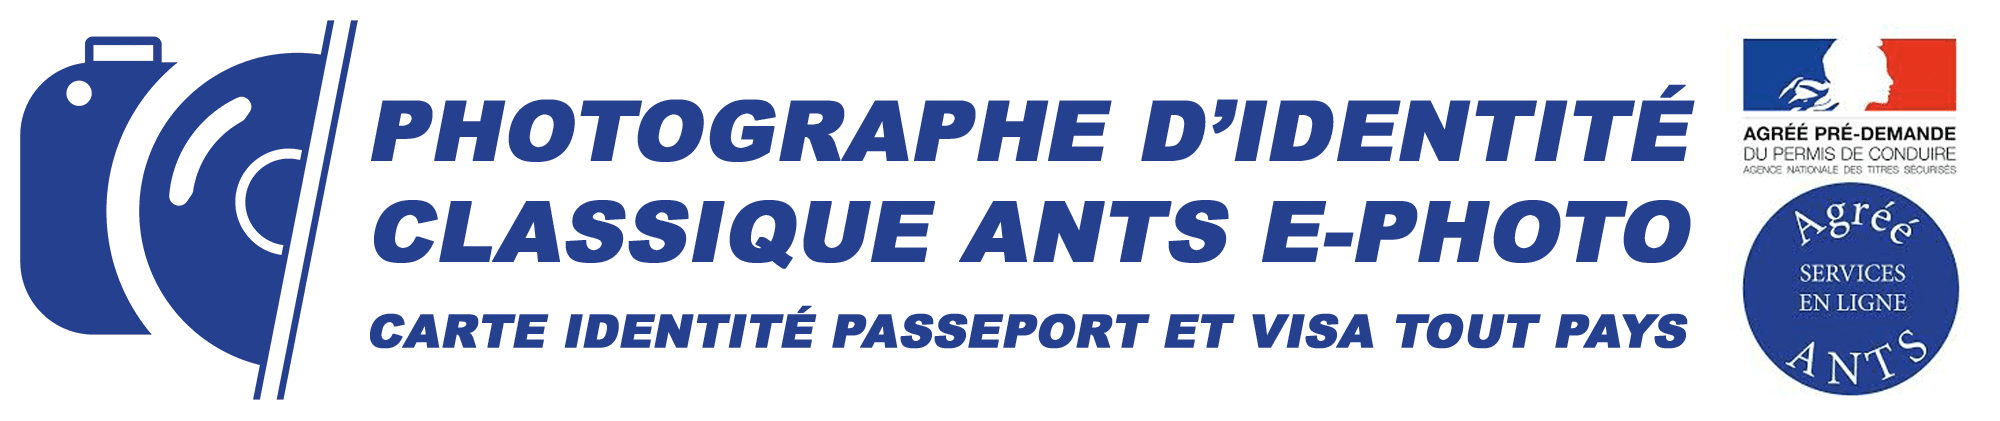 Photographe identité ants ephoto passeport visa